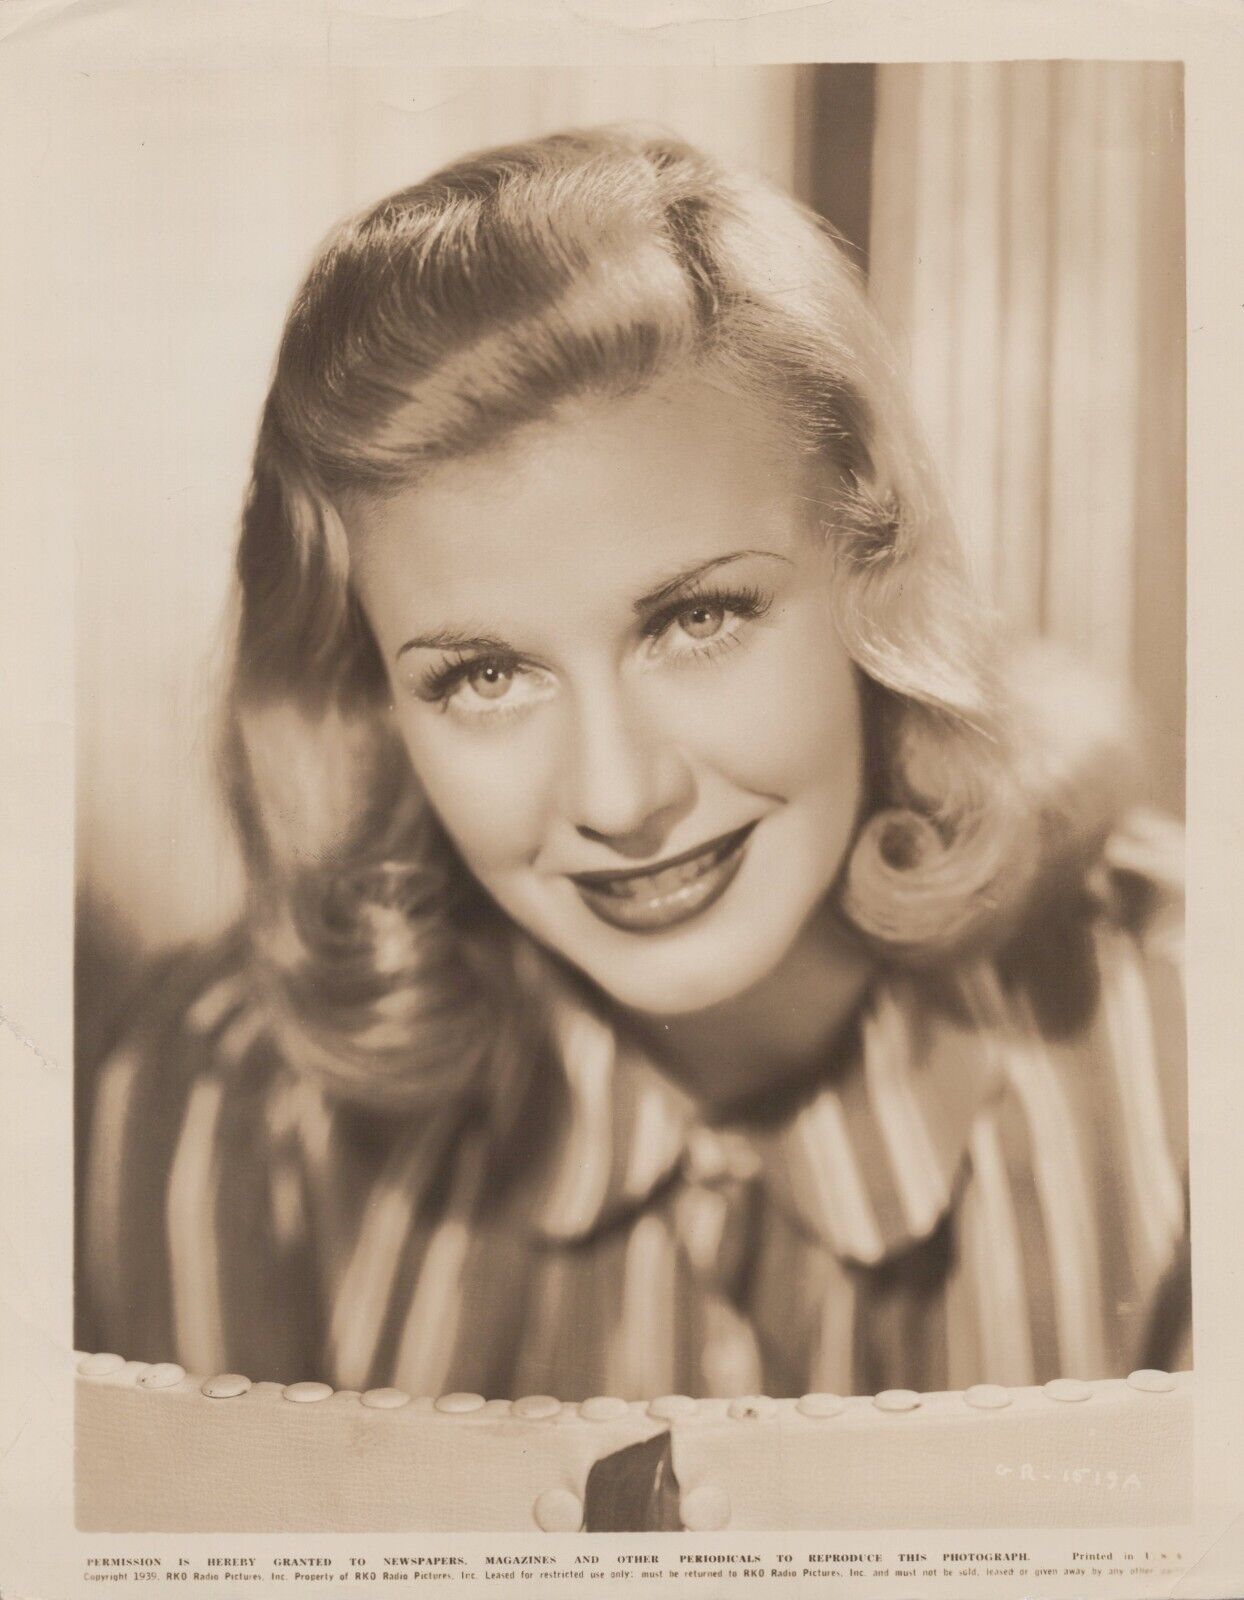 Ginger Rogers (1939) ❤ Stunning Portrait Original Vintage RKO Radio Photo K 248